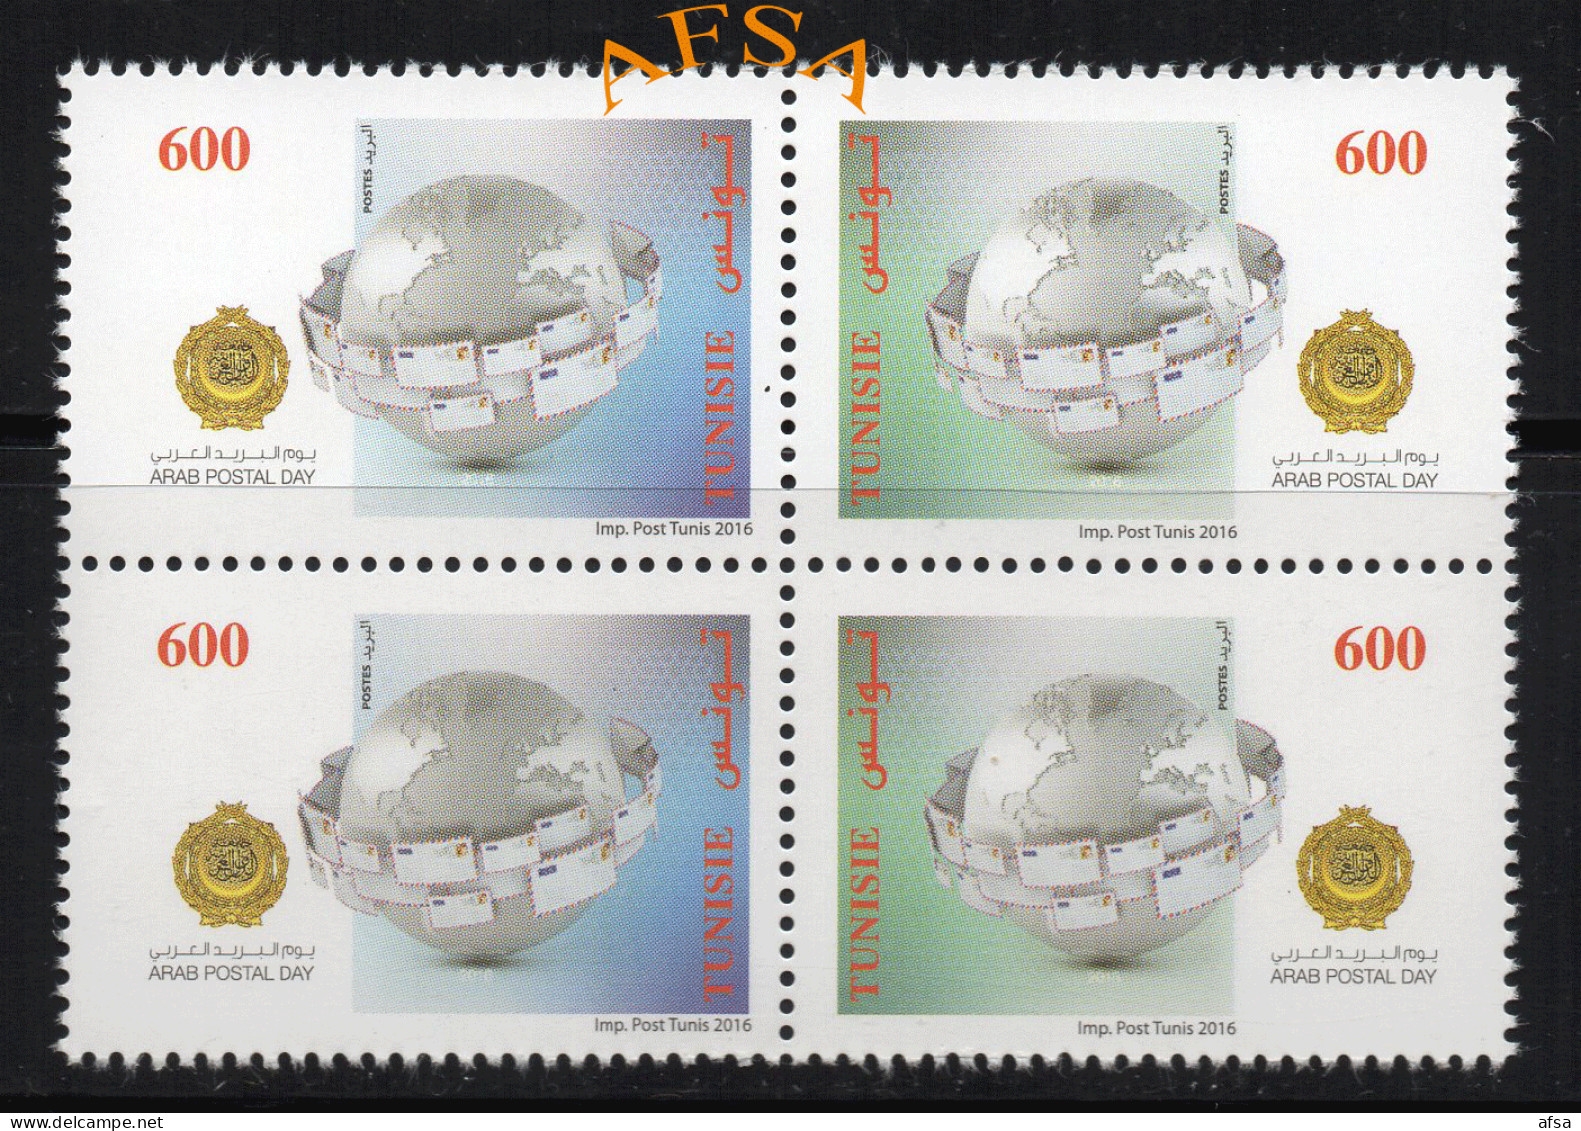 Tunisia 2016-Arab Postal Day-(Block Of 4) Joint Issue With Egypt,Jordan,Bahrain,UAE.Lebanon,irak - Ungebraucht